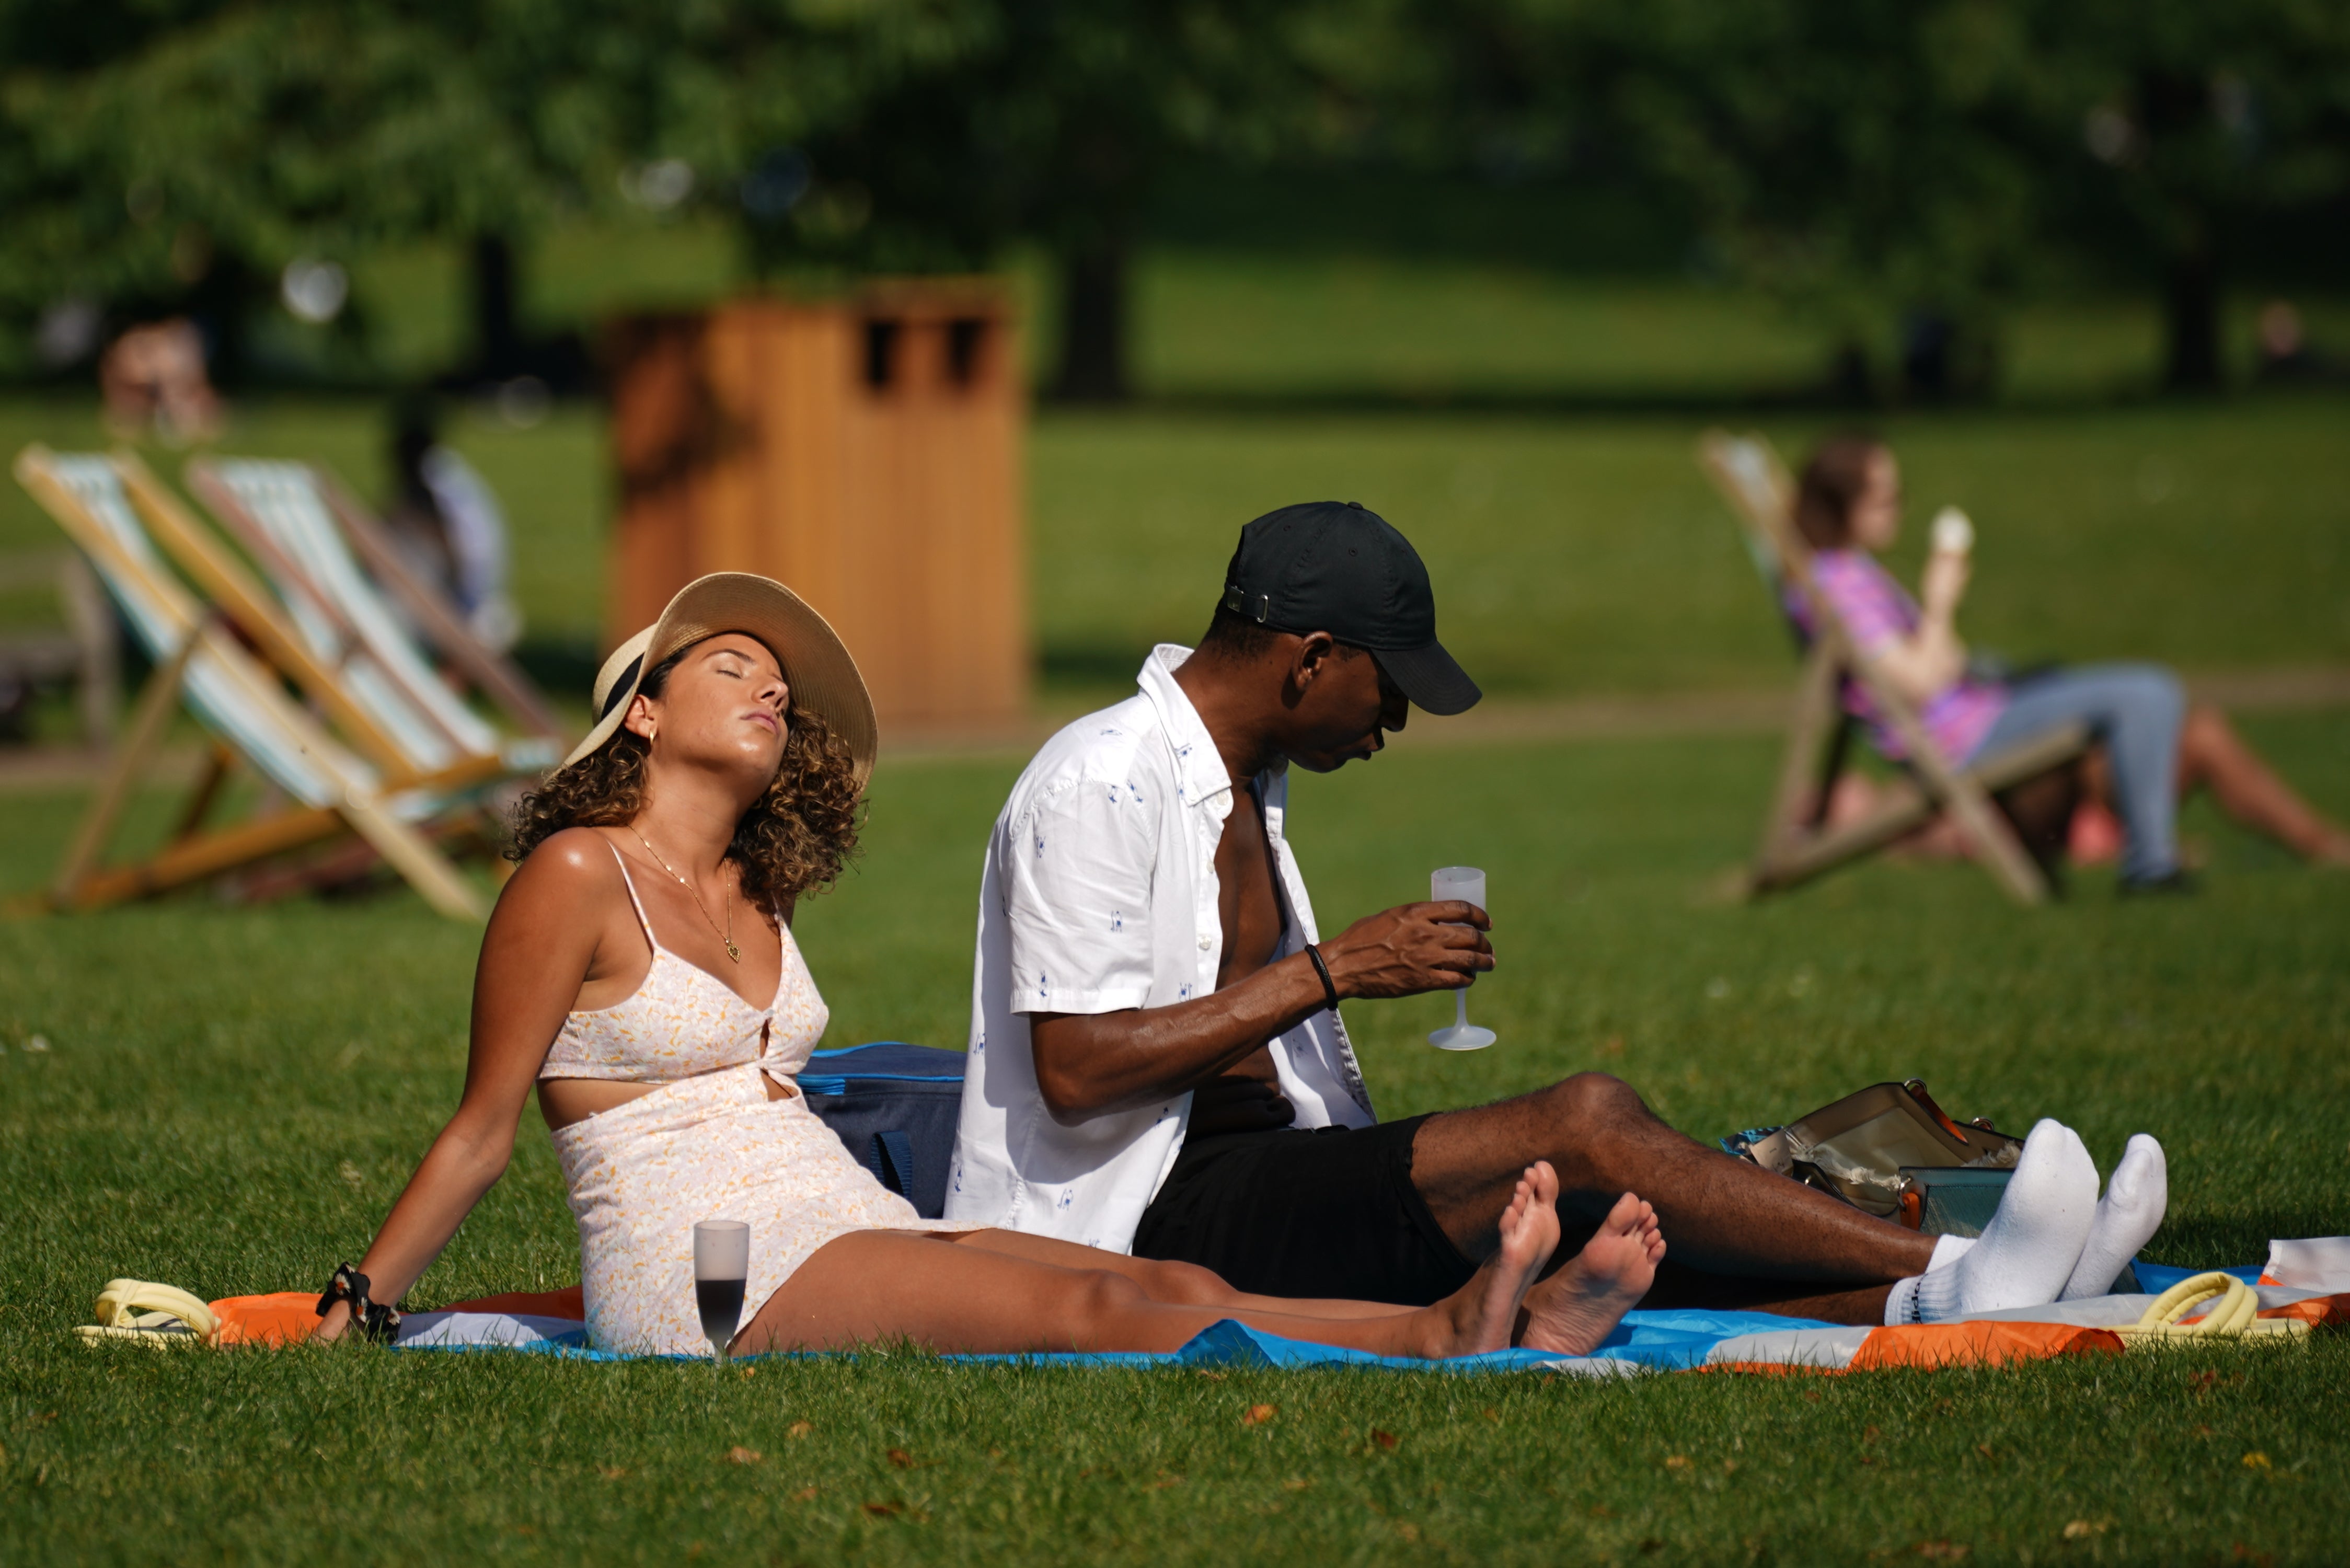 UK Heatwave People enjoy the sun in St James’s Park, London